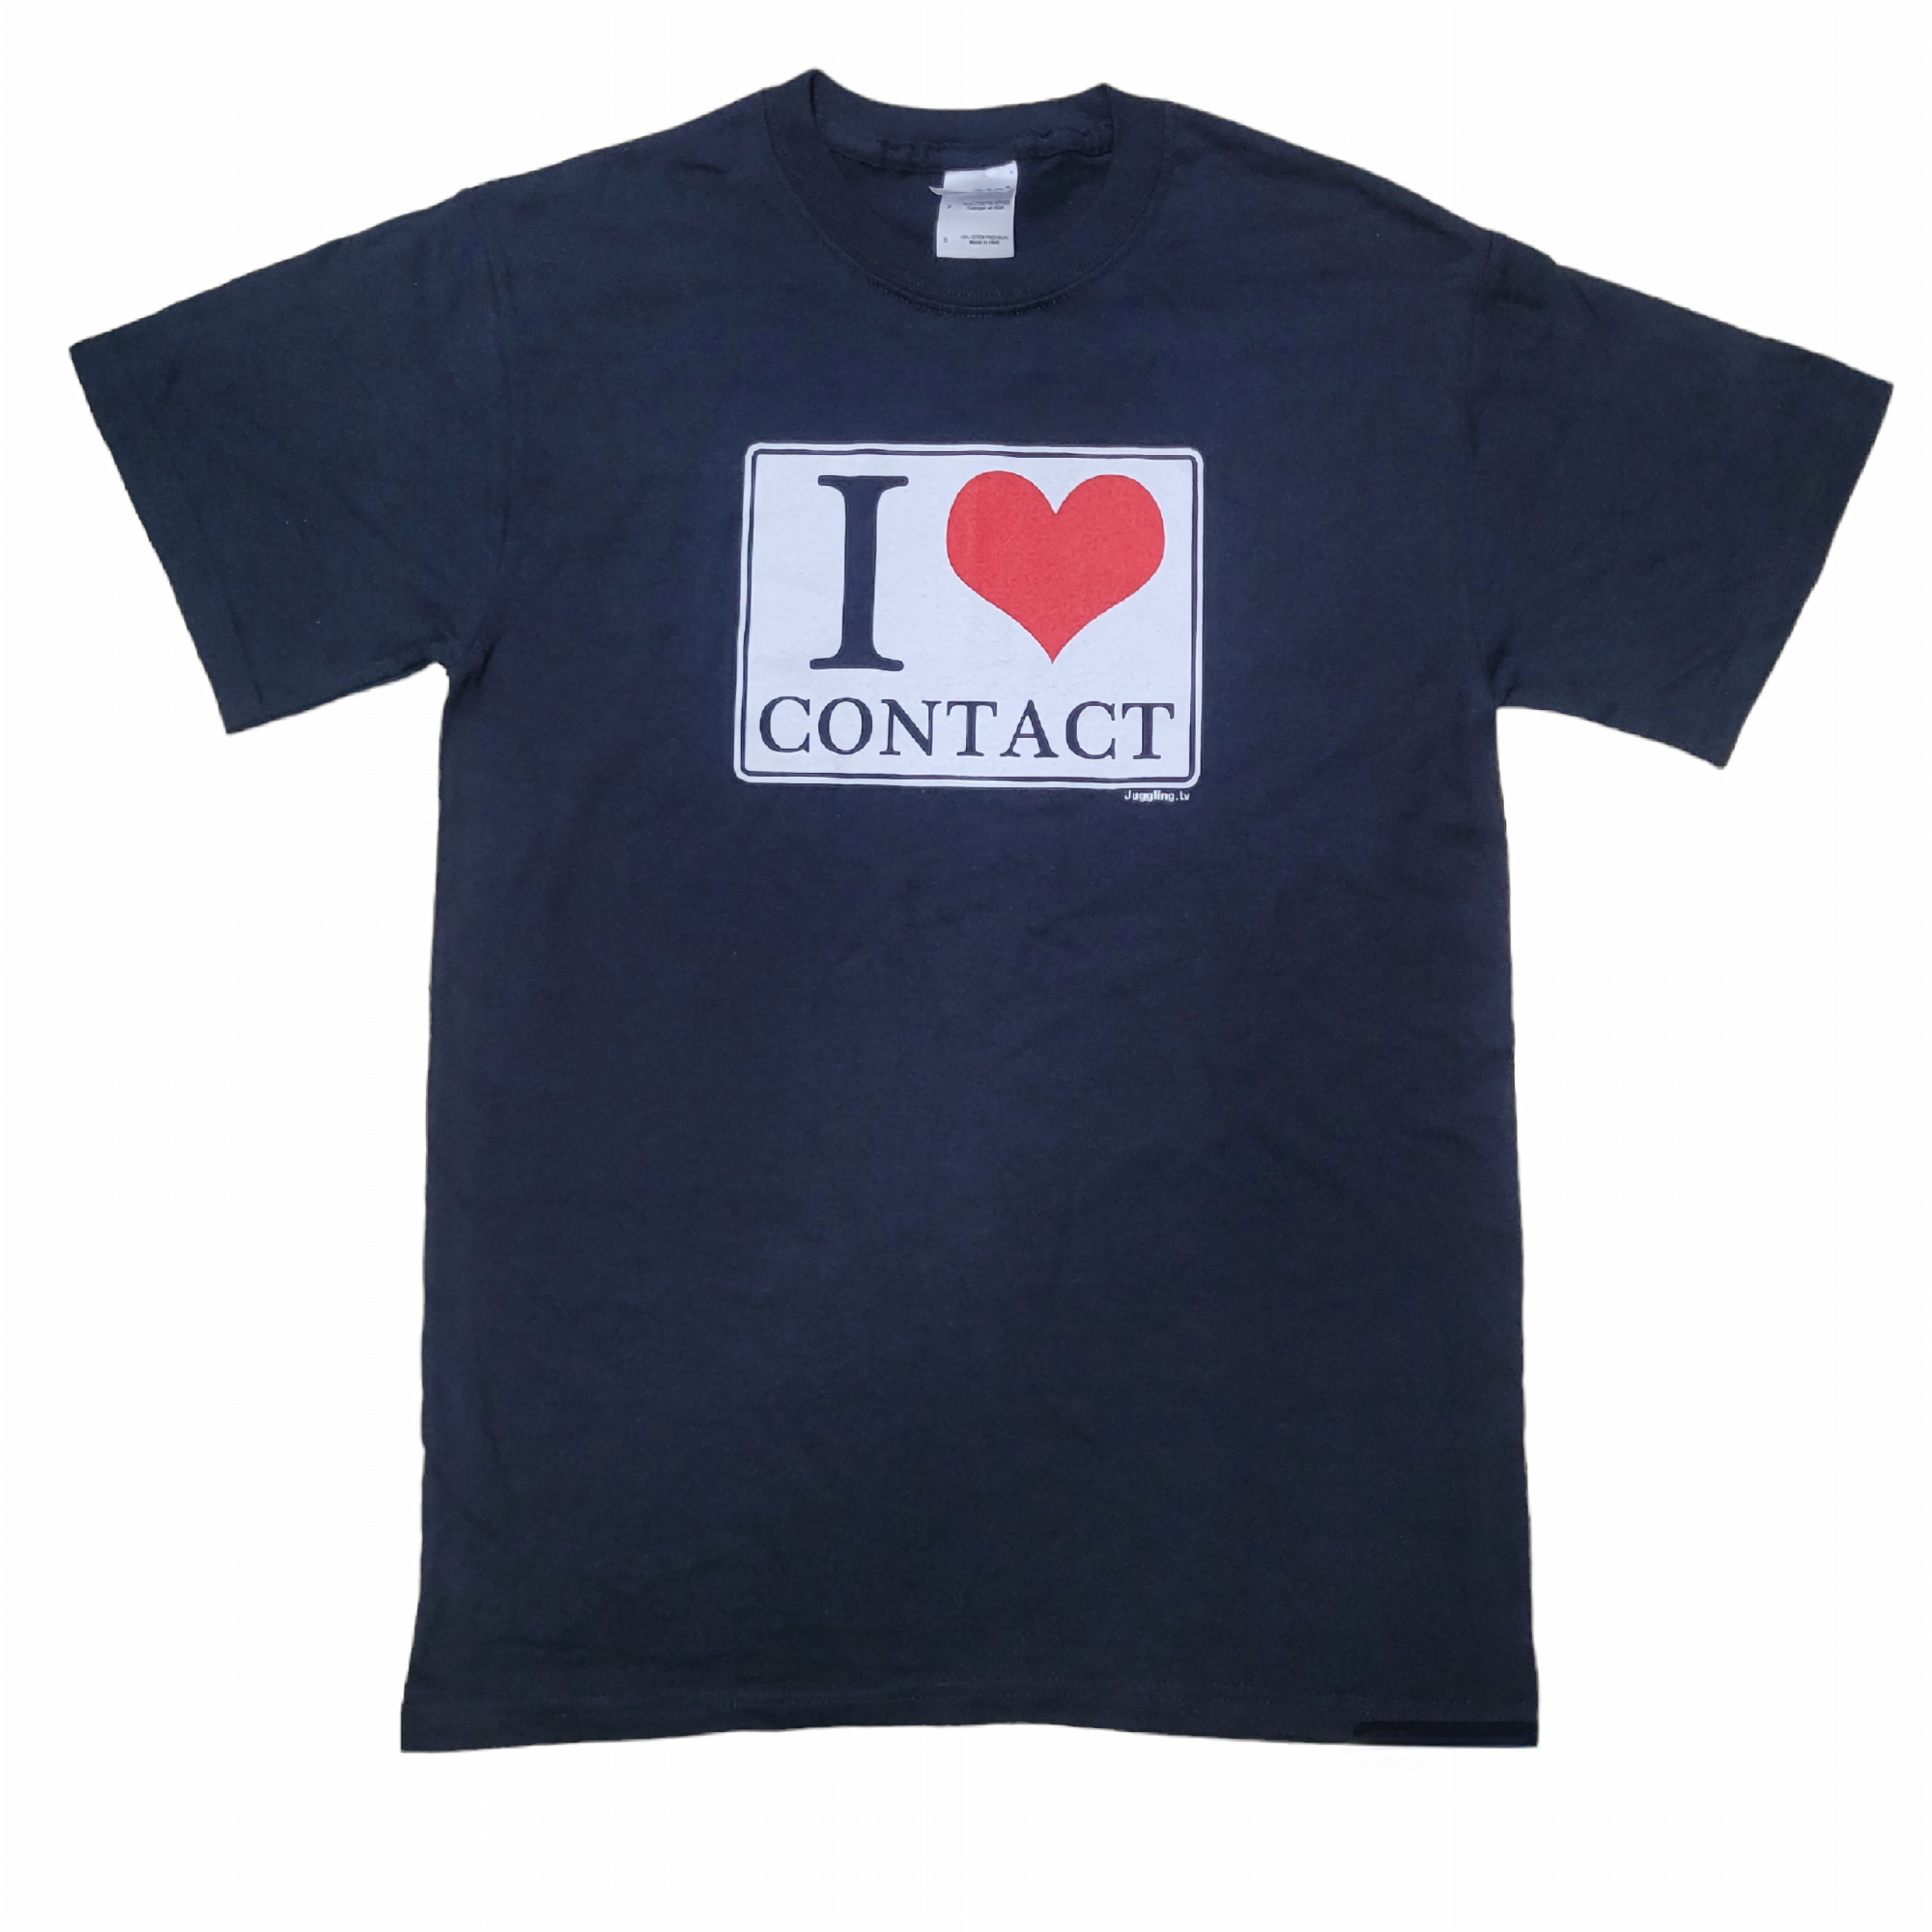 Contact Juggling T-shirt - I Love Contact